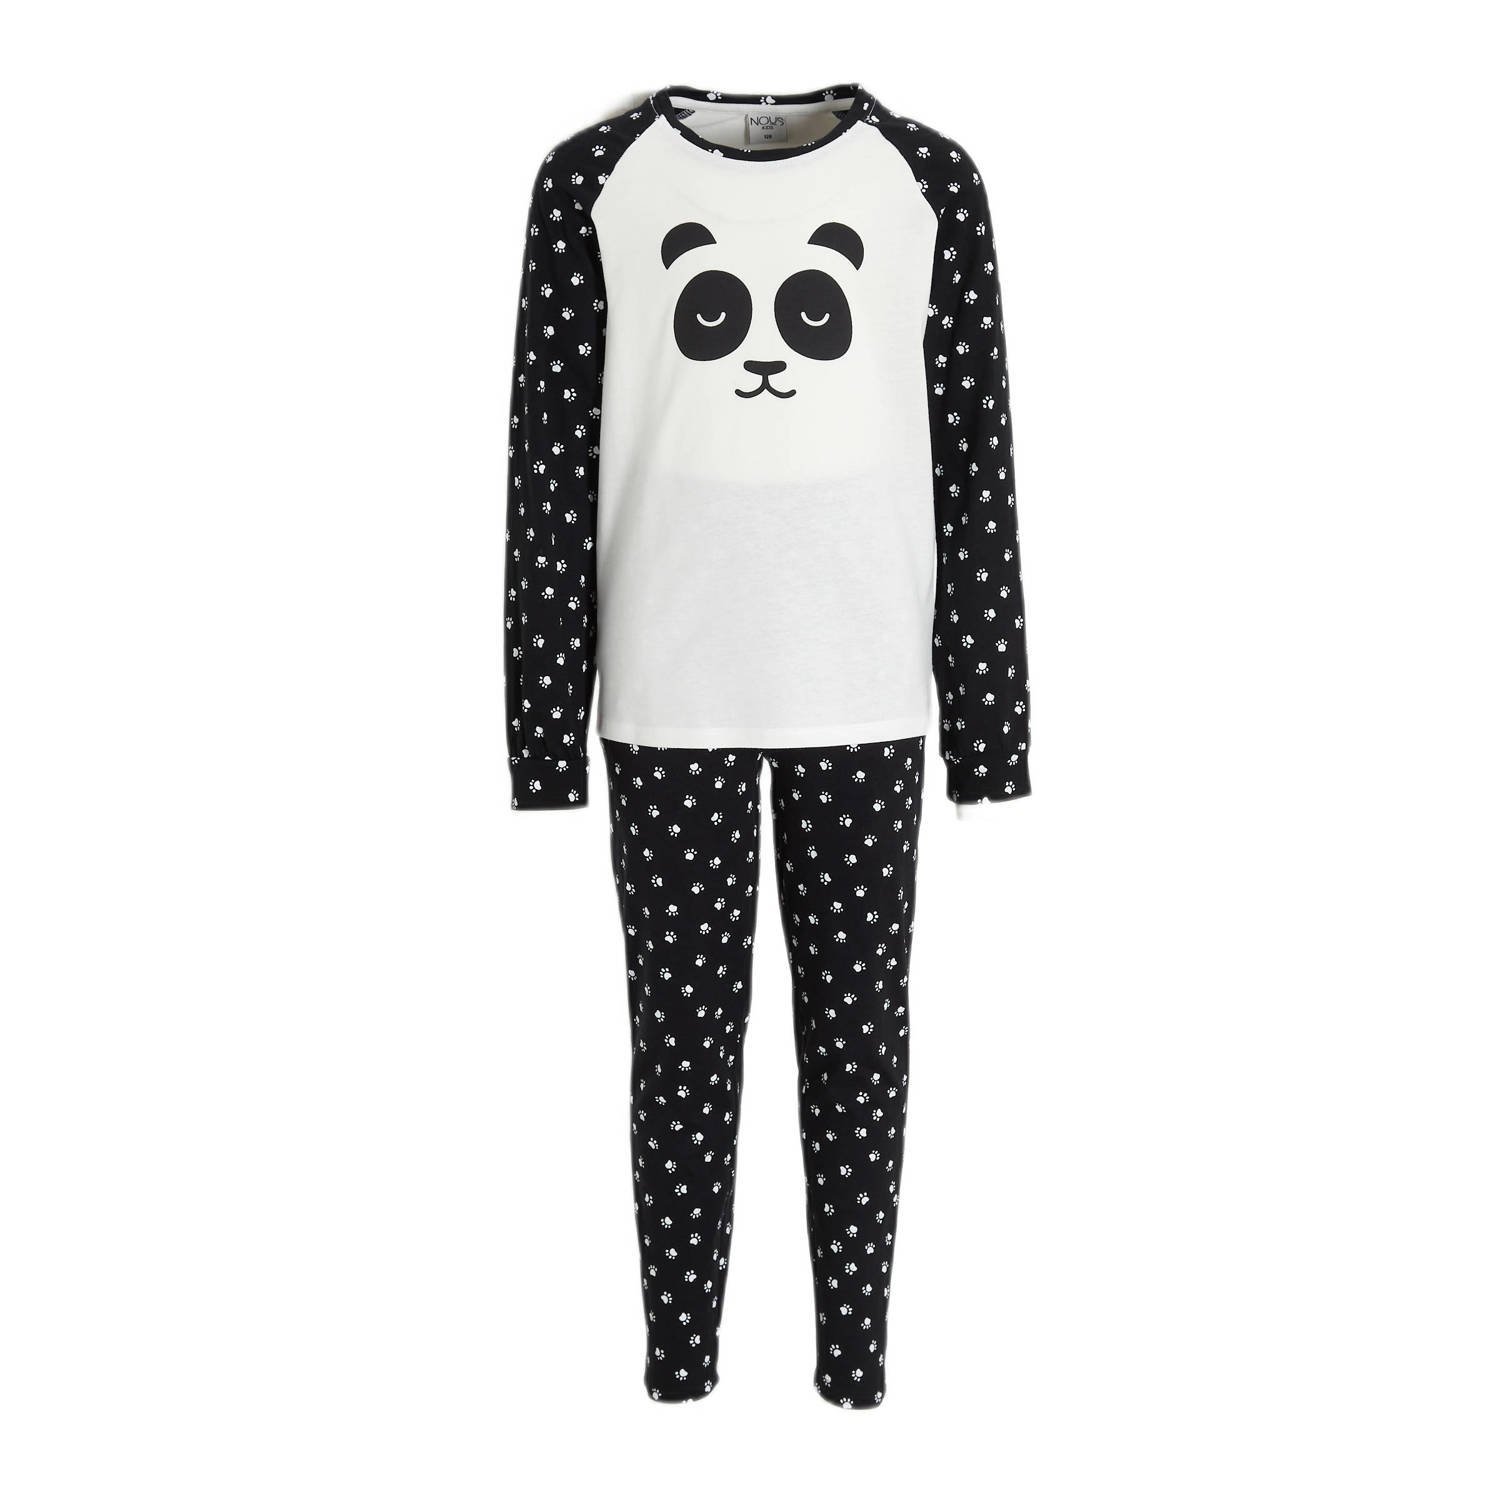 NOUS Kids pyjama Panda Paws zwart wit Katoen Ronde hals 110 116